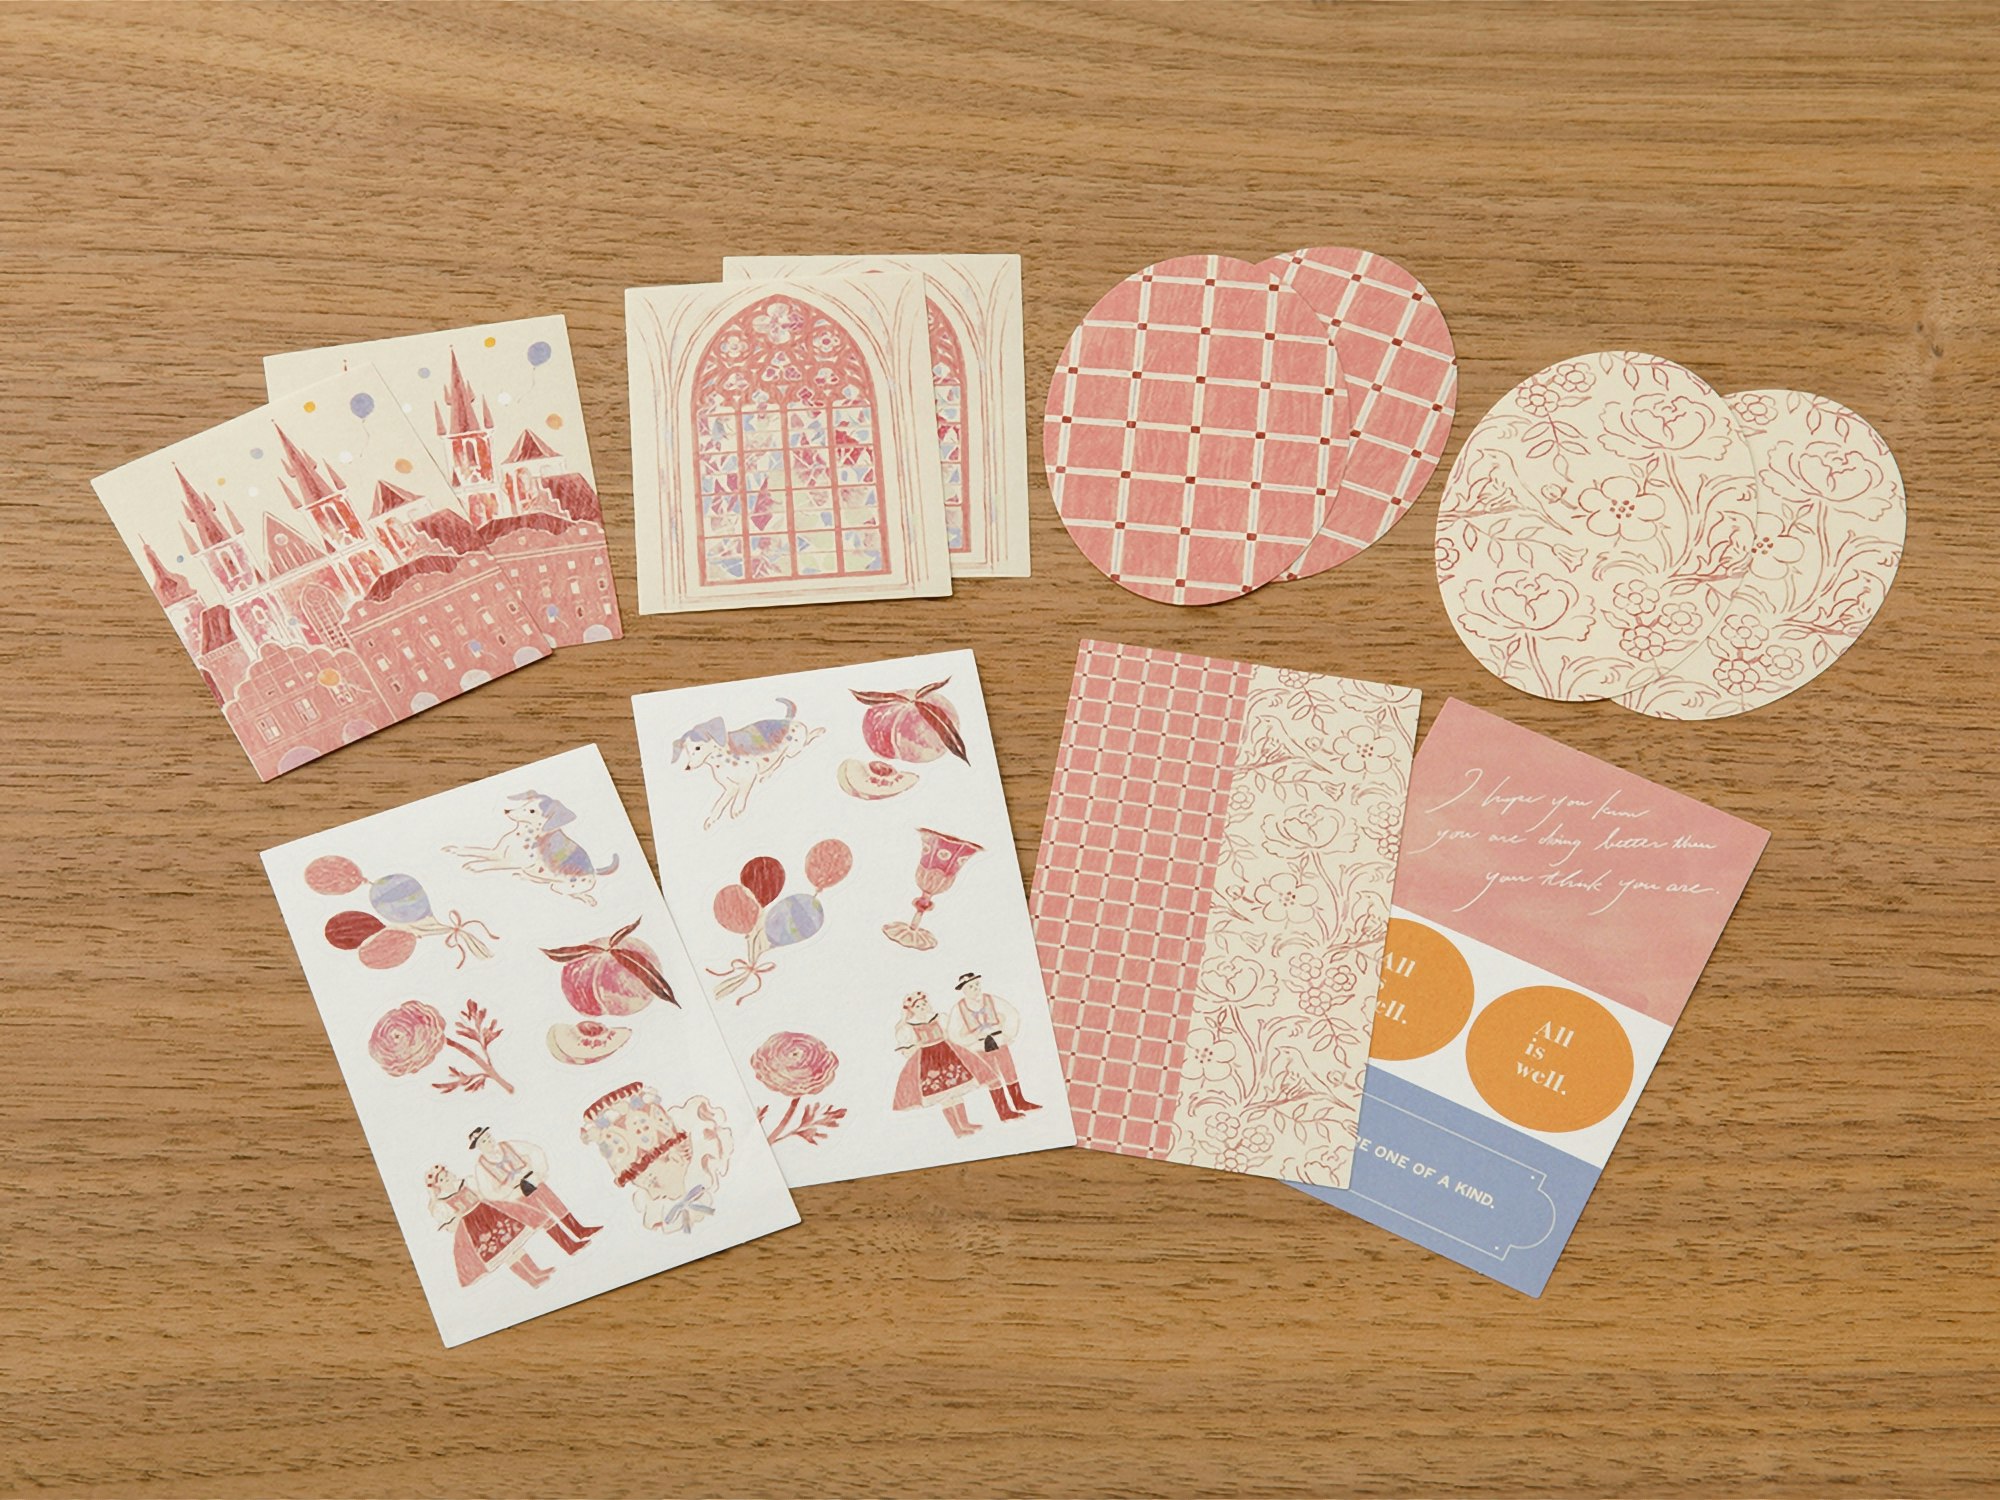 Midori Decoration Sticker Pink